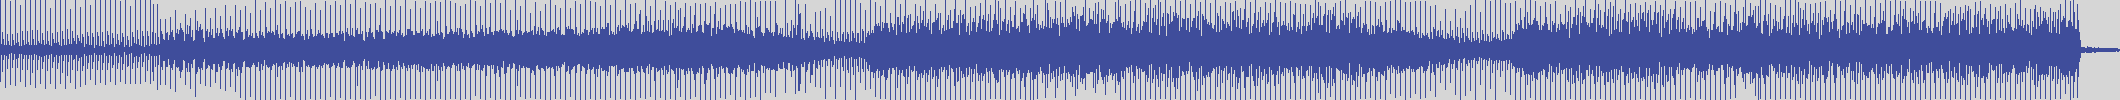 nf_boyz_records [NFY089] Aura 999 - Aural Flot [North Sine Mix] audio wave form